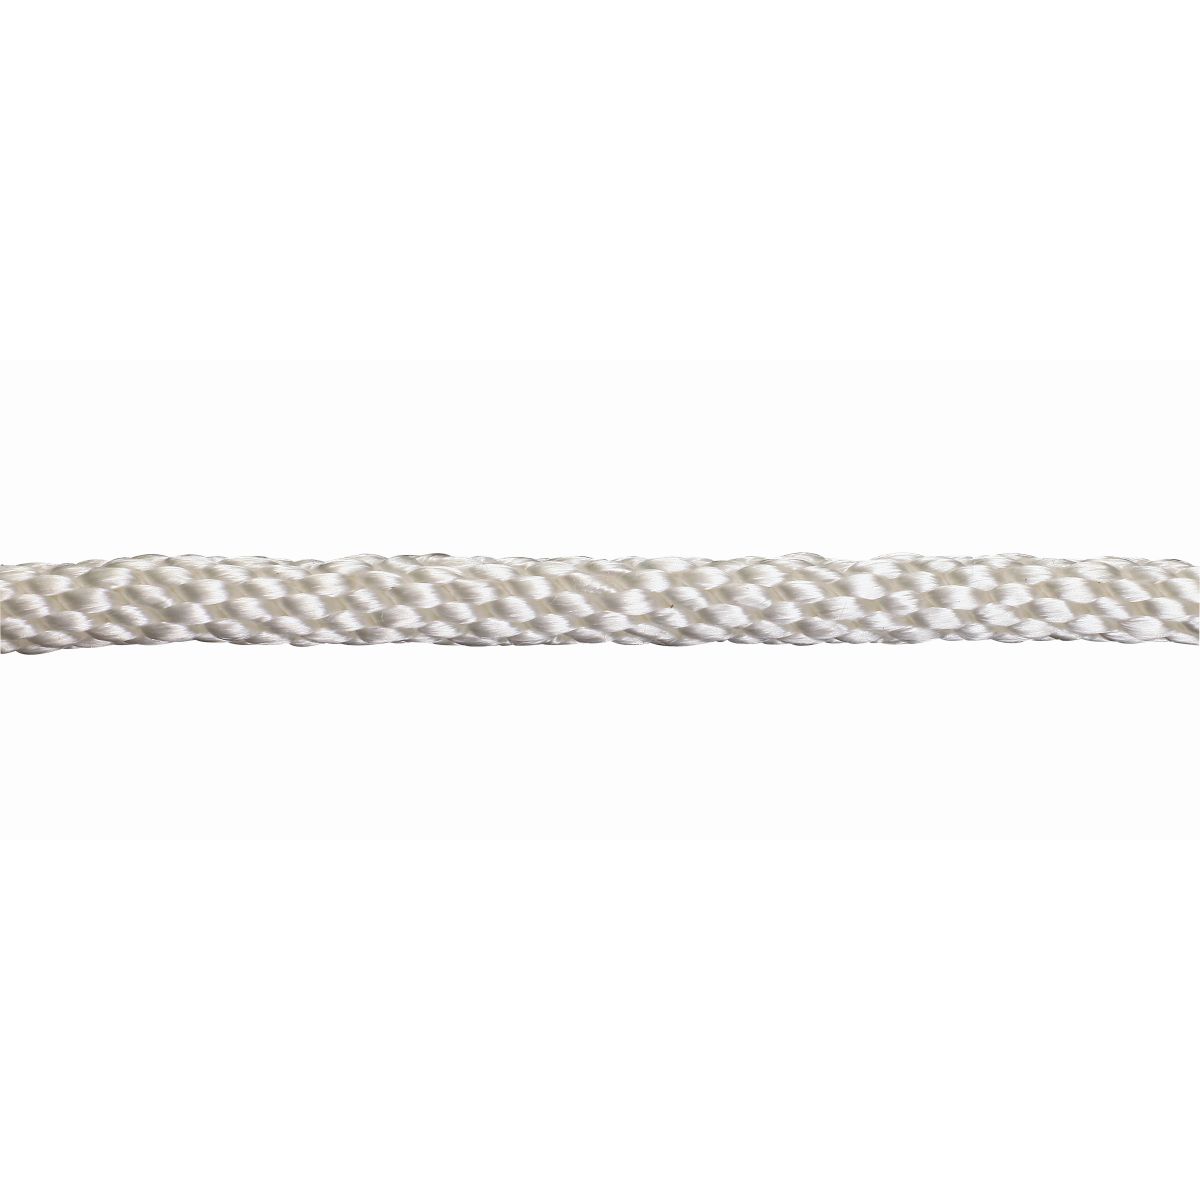 1/8" Solid Braid Nylon Rope